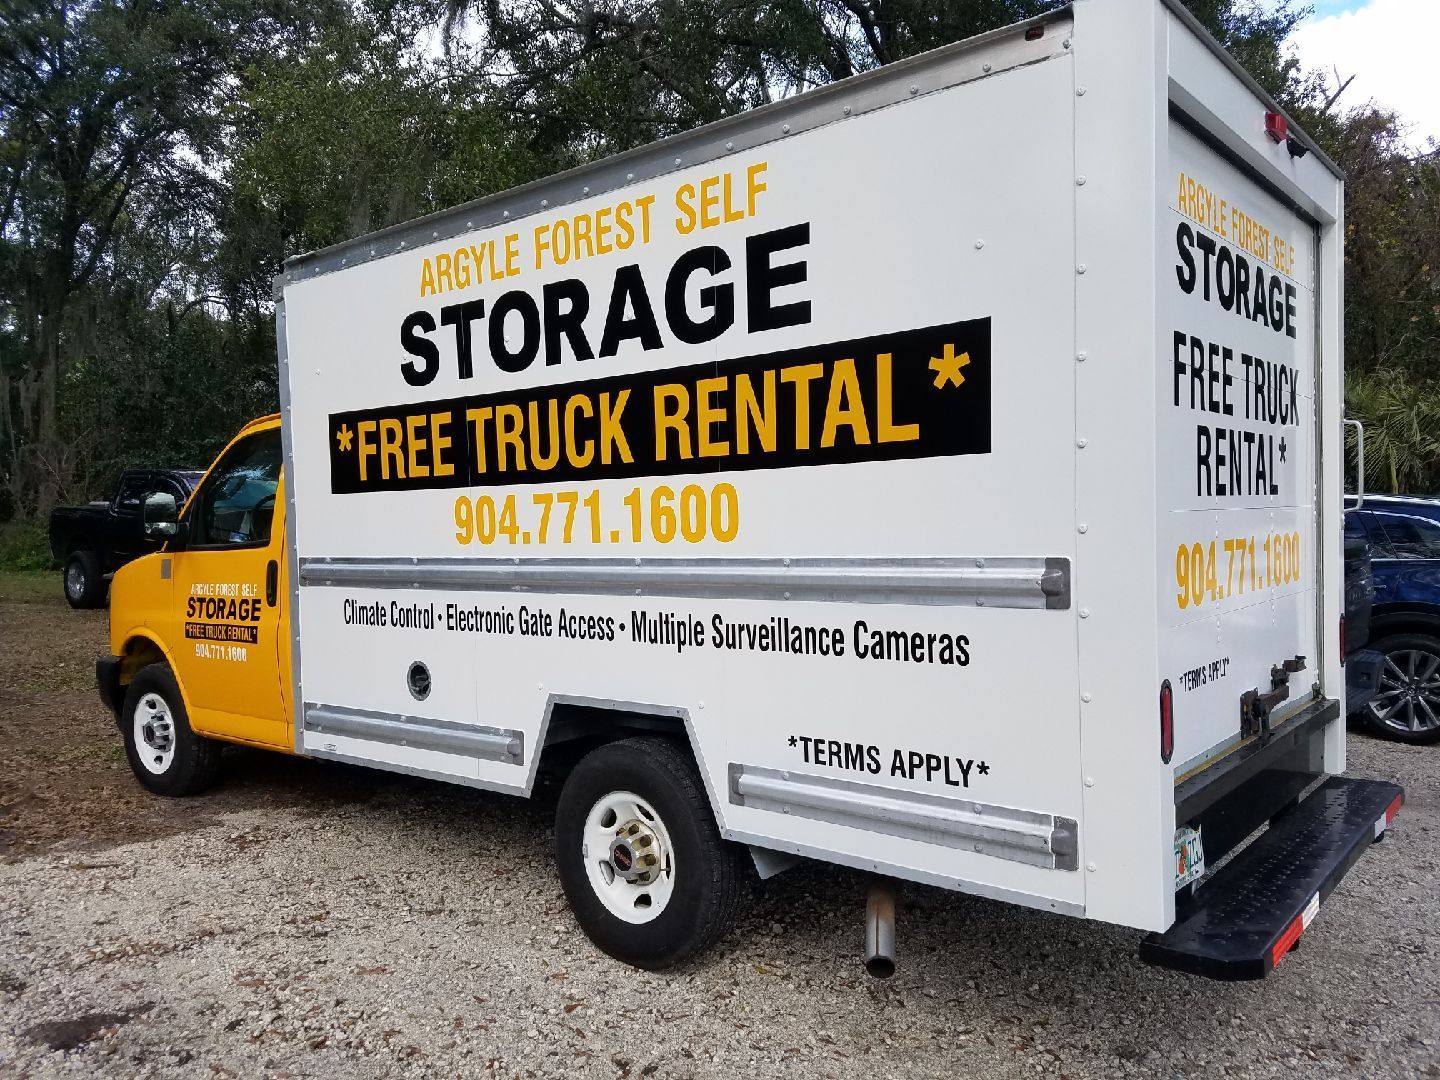 Storage Truck Rental Parked In A Lot - Jacksonville, FL - Argyle Forest Self Storage